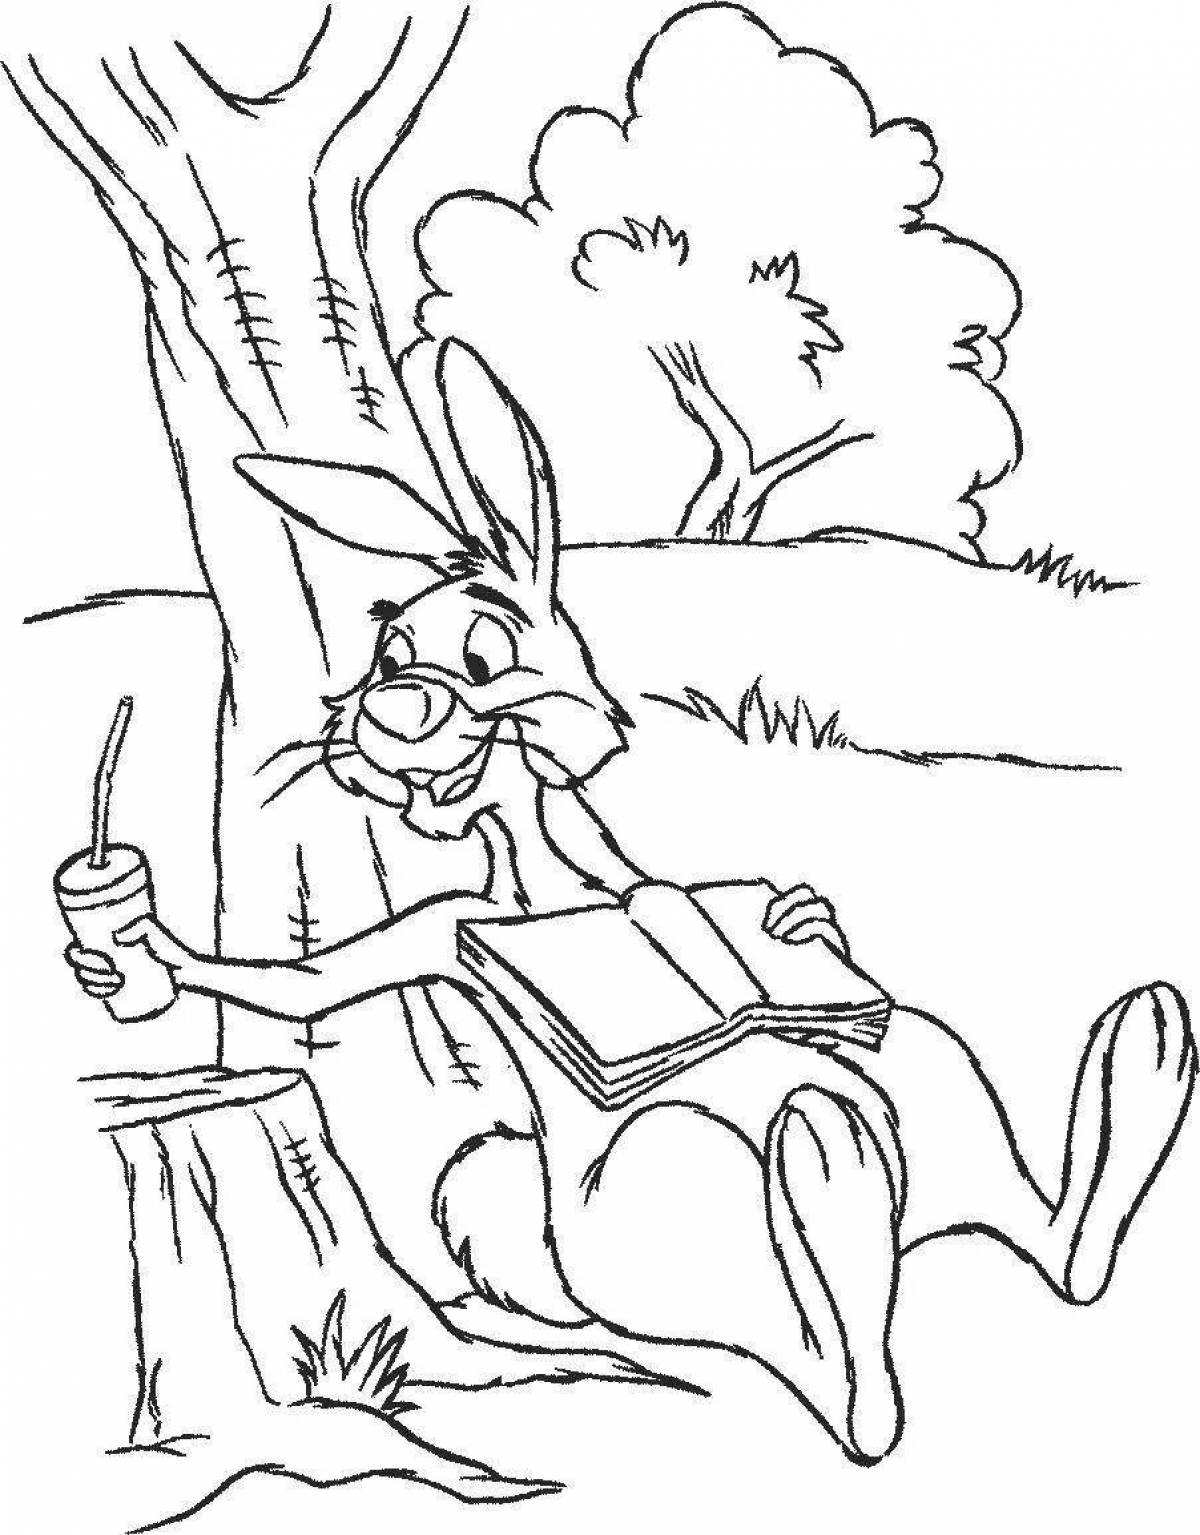 Coloring book brave hare